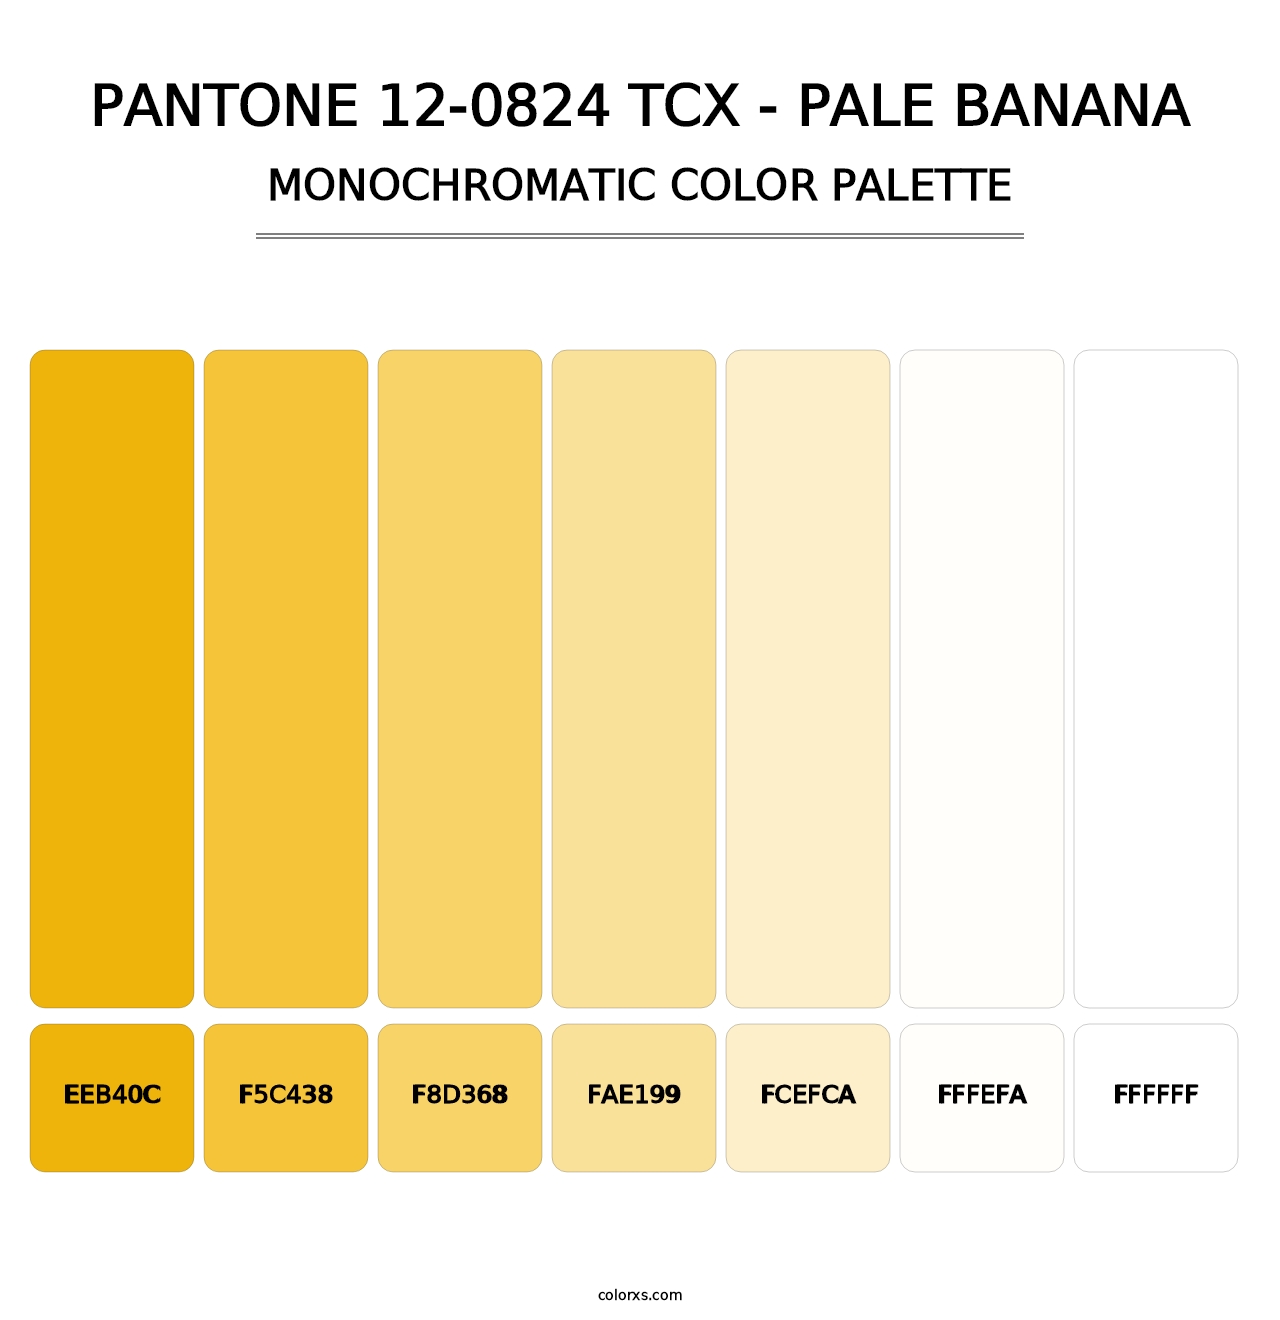 PANTONE 12-0824 TCX - Pale Banana - Monochromatic Color Palette